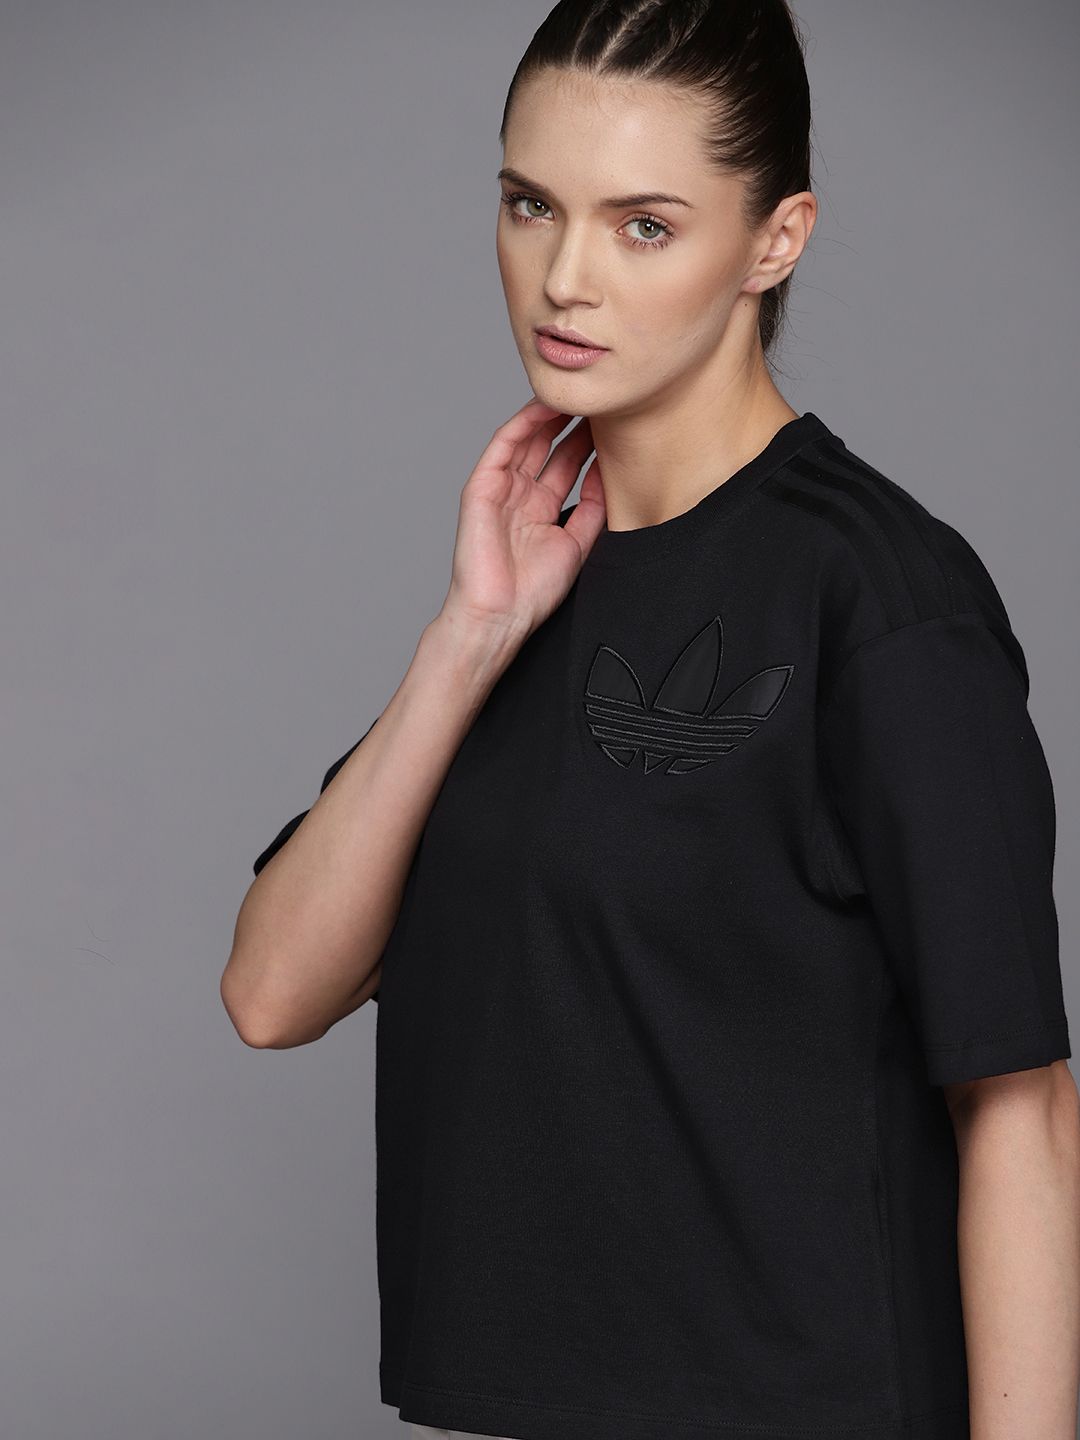 ADIDAS Originals Women Black Brand Logo Pure Cotton Loose T-shirt Price in India